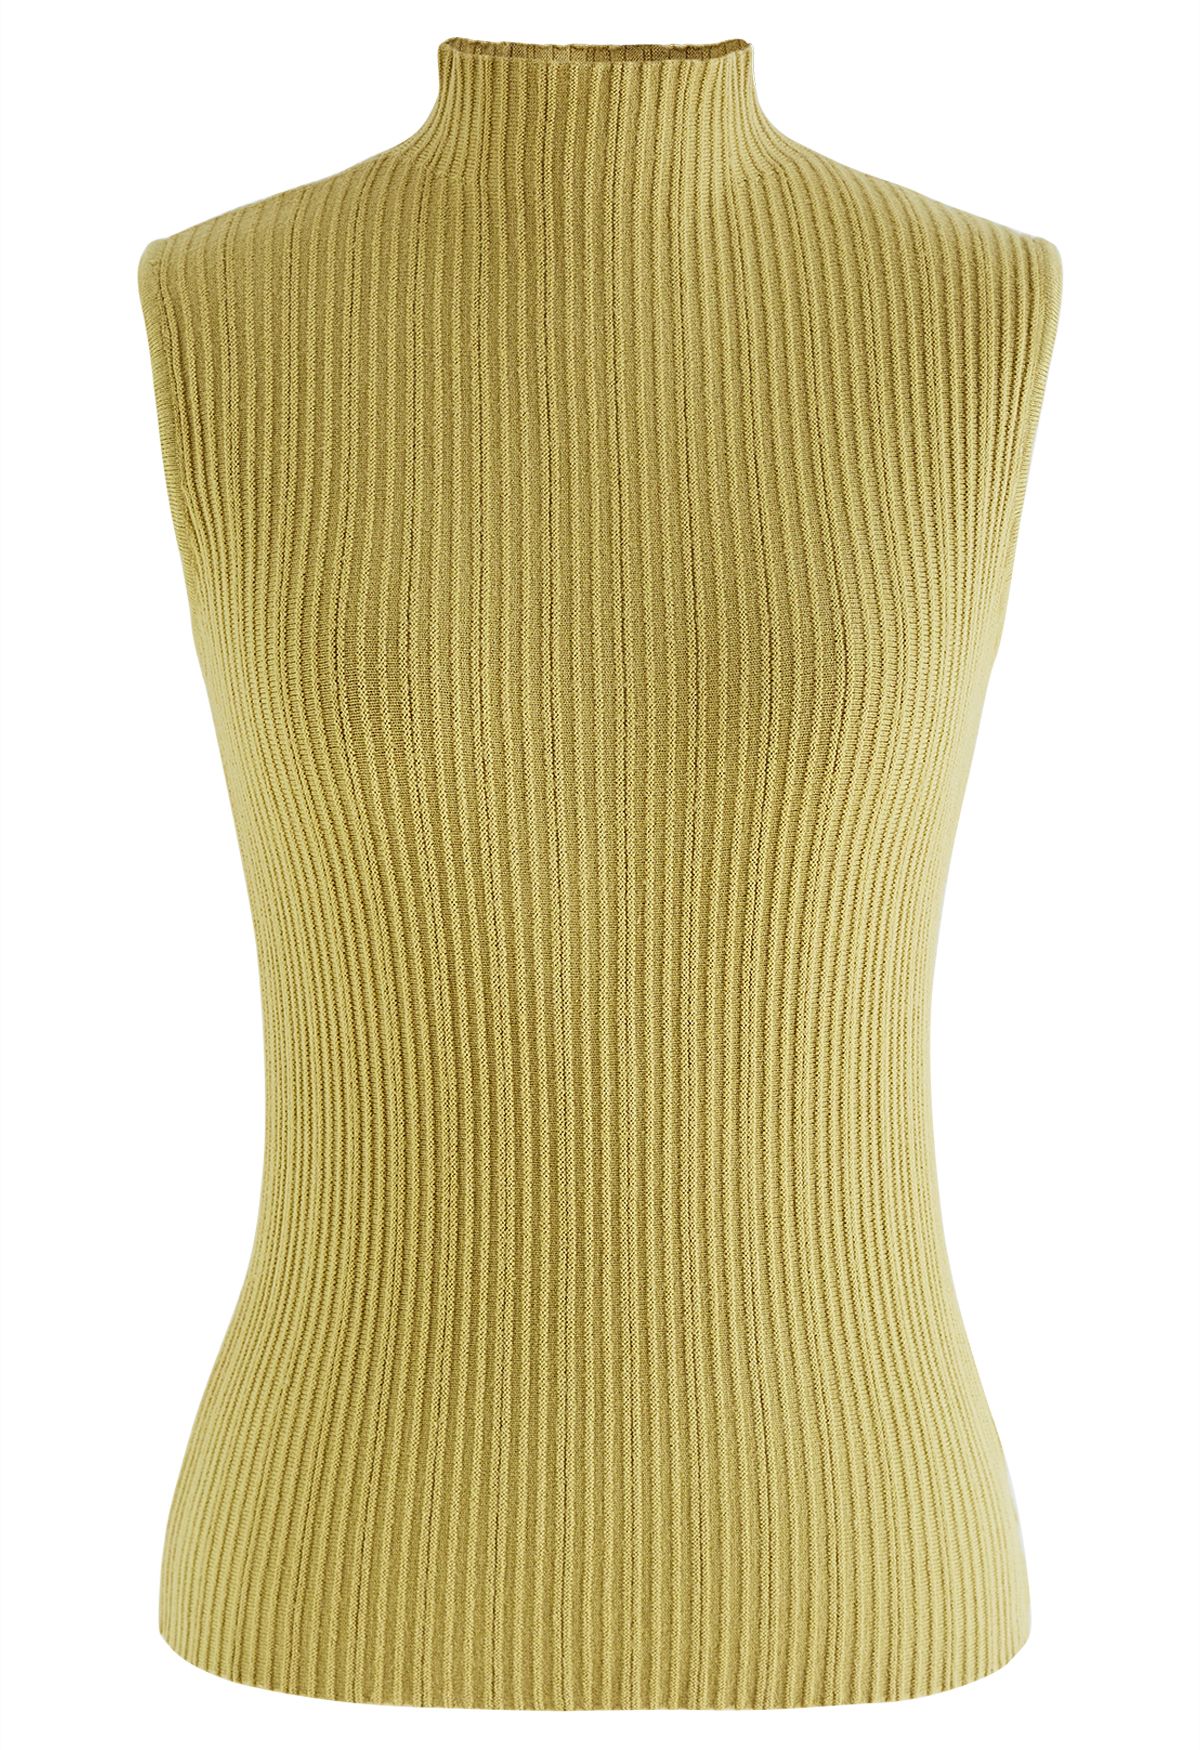 Mock Neck Sleeveless Textured Knit Top in Mustard